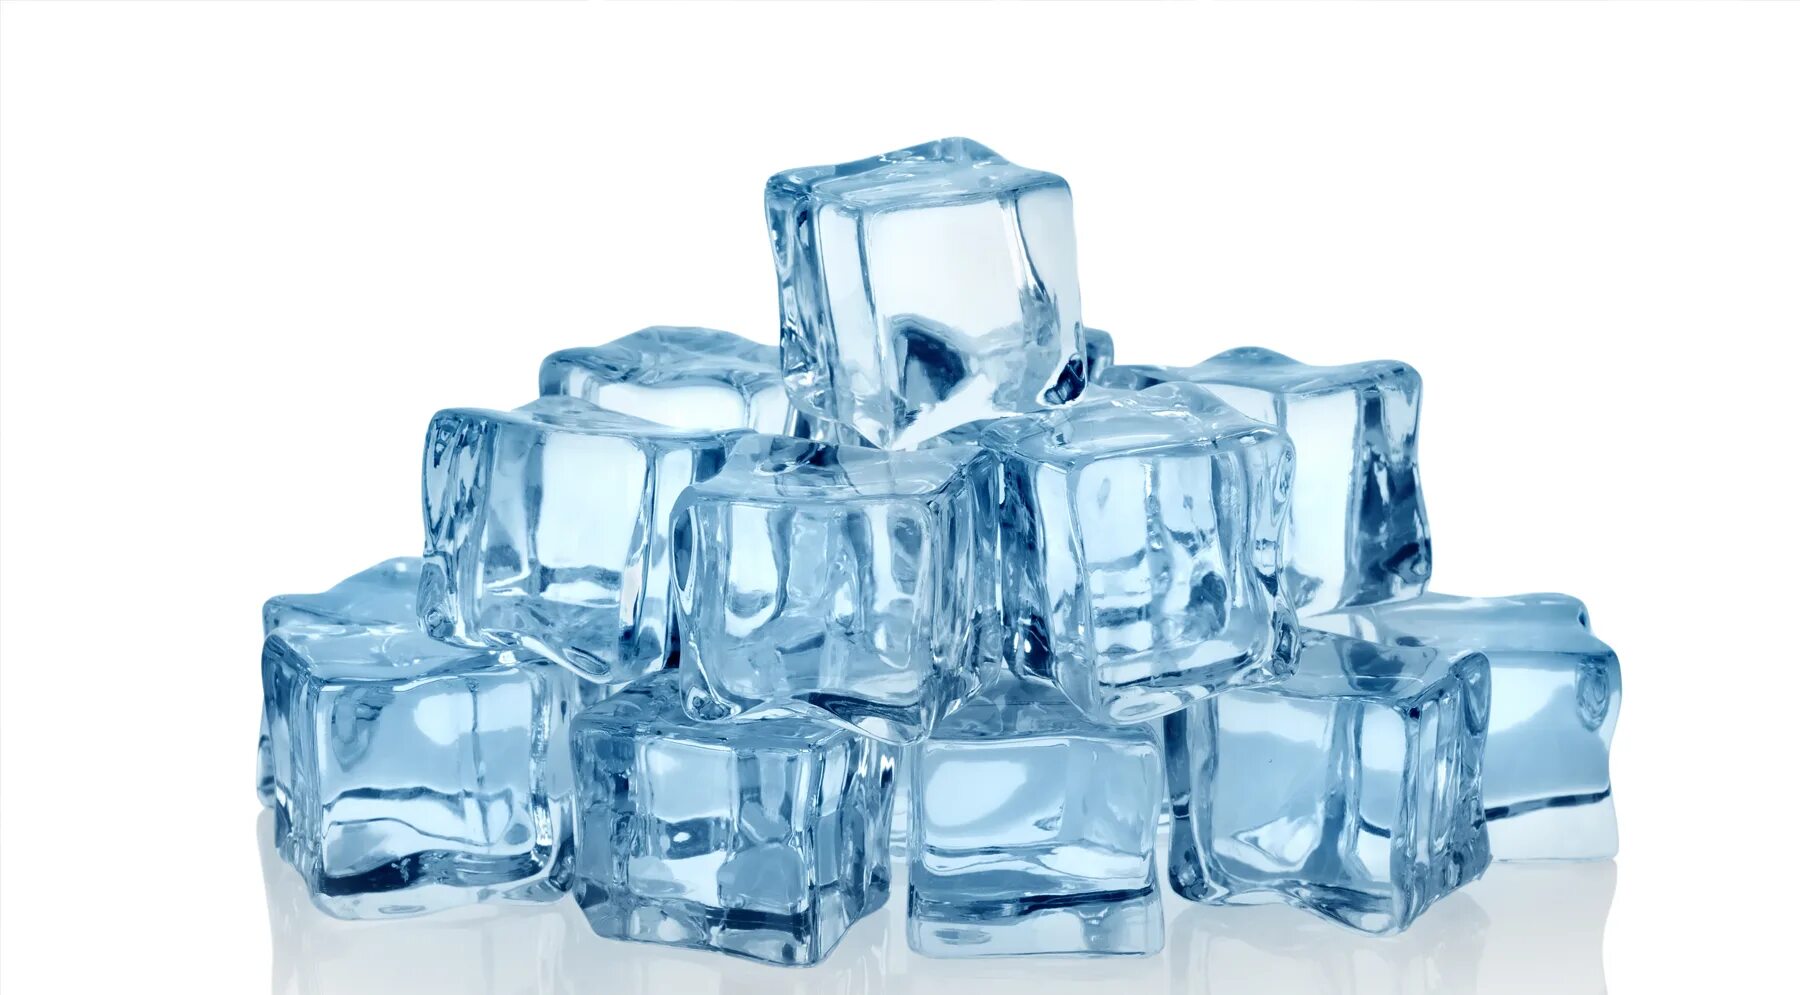 Сколько кубиков льда. Кубики льда. Кусочки льда. Стеклянный кубик. Кубики льда на прозрачном фоне.